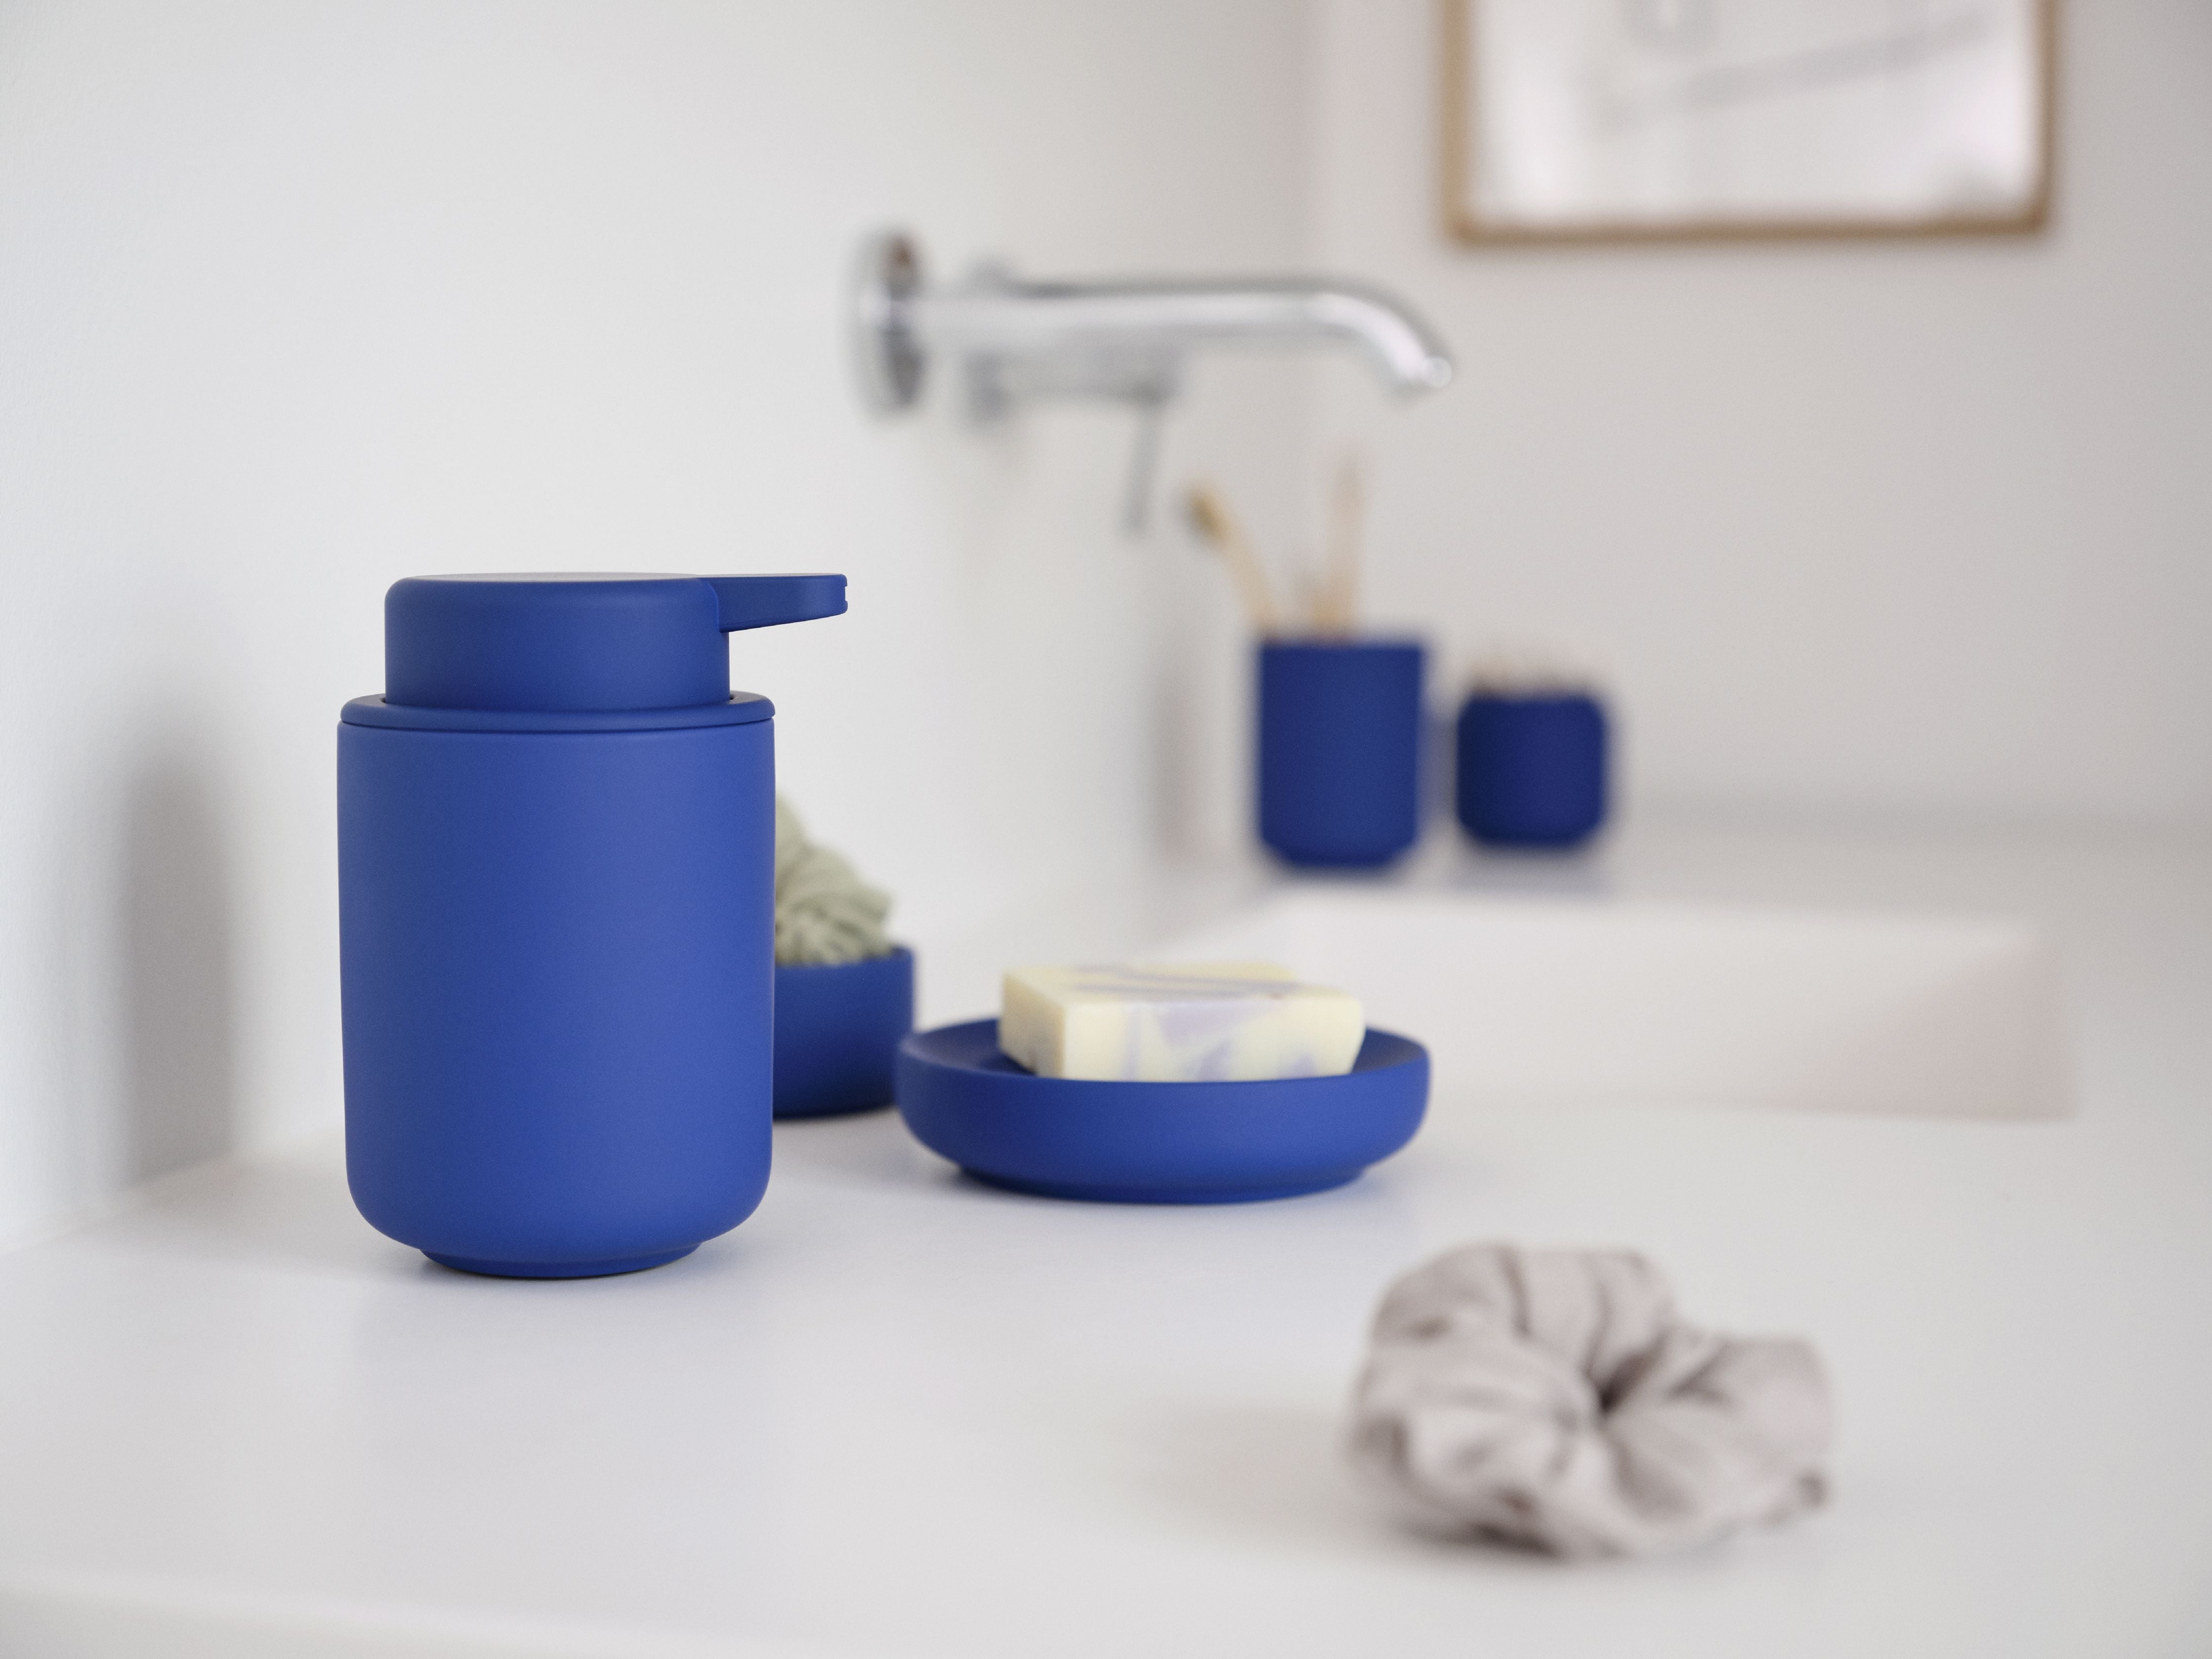 Zone Danmark Ume Soap Dispenser 0,25 liter, Indigo Blue